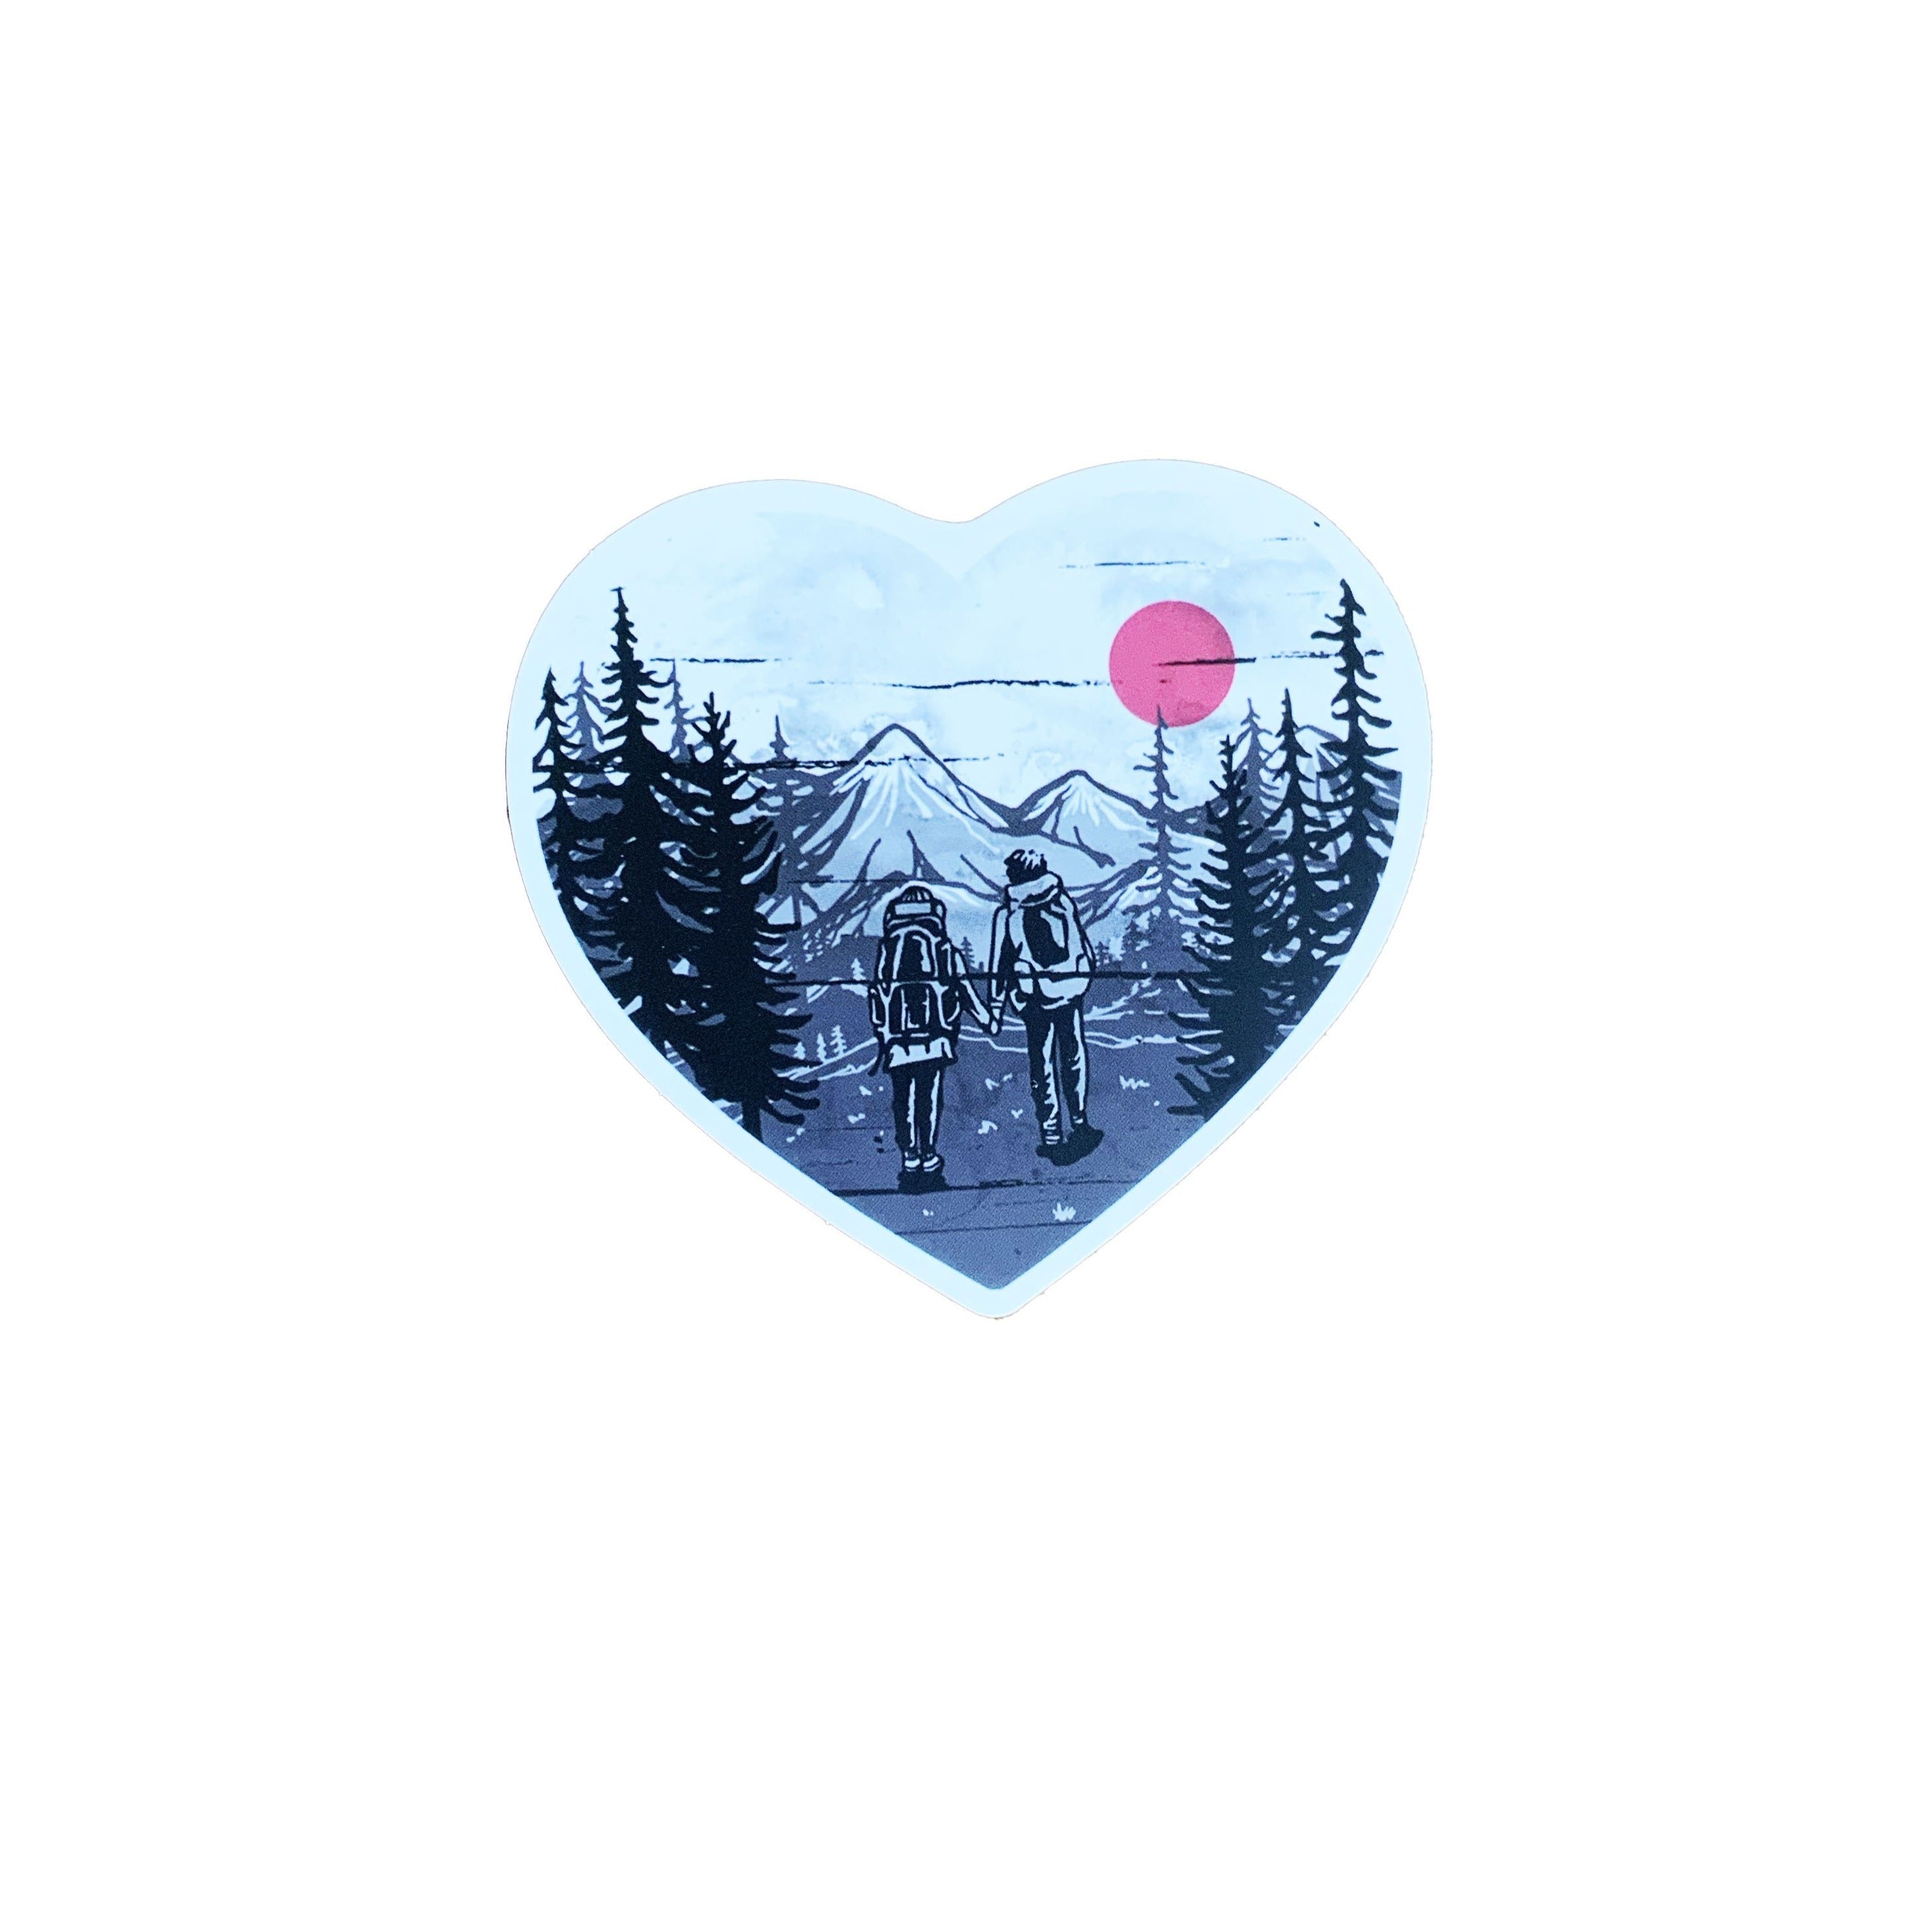 Heart Hike Sticker, sticker, Pacific Rayne, Defiance Outdoor Gear Co.